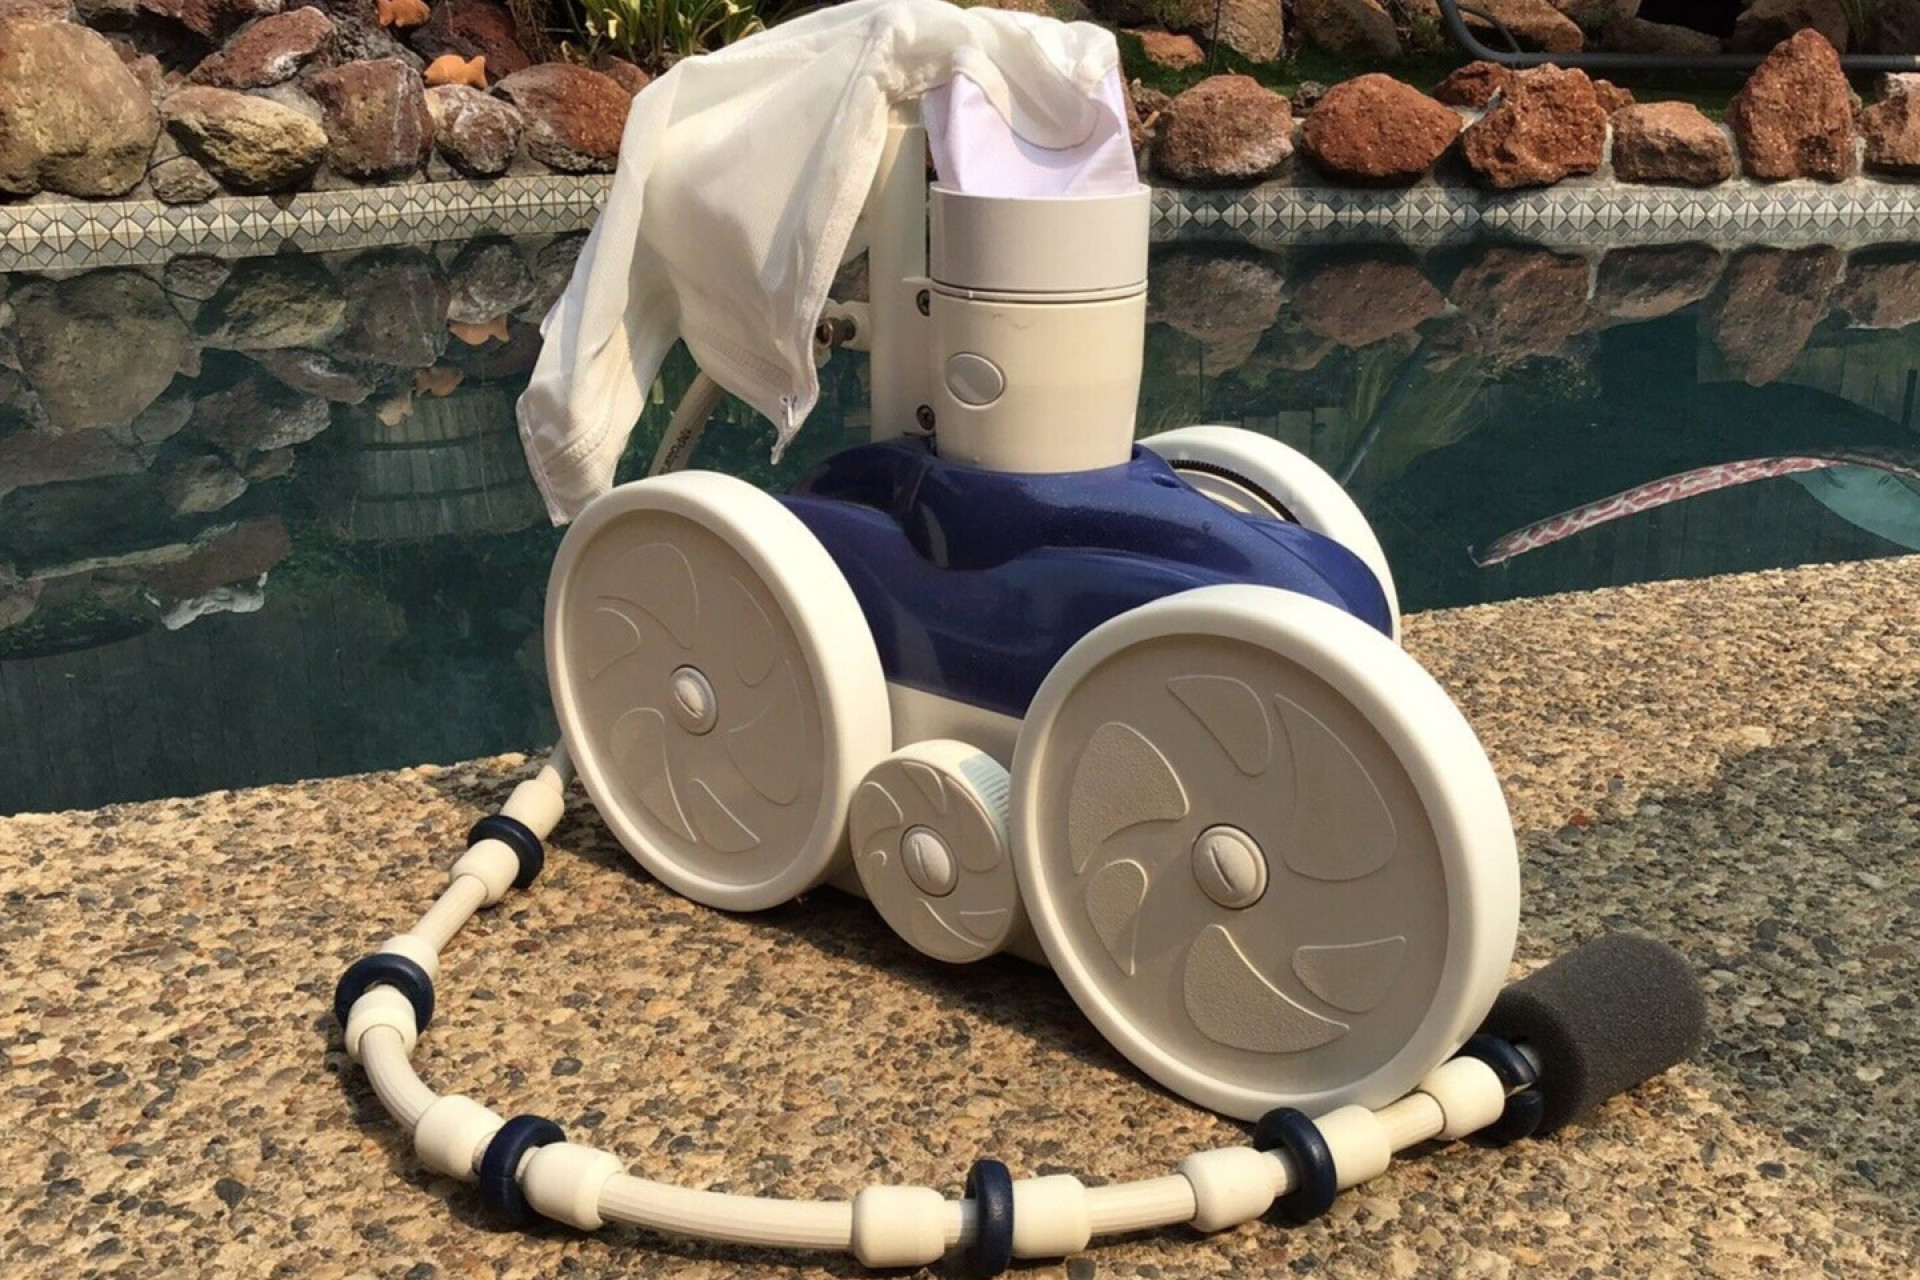 Robot de piscine Polaris 280 - MonRobotPiscine